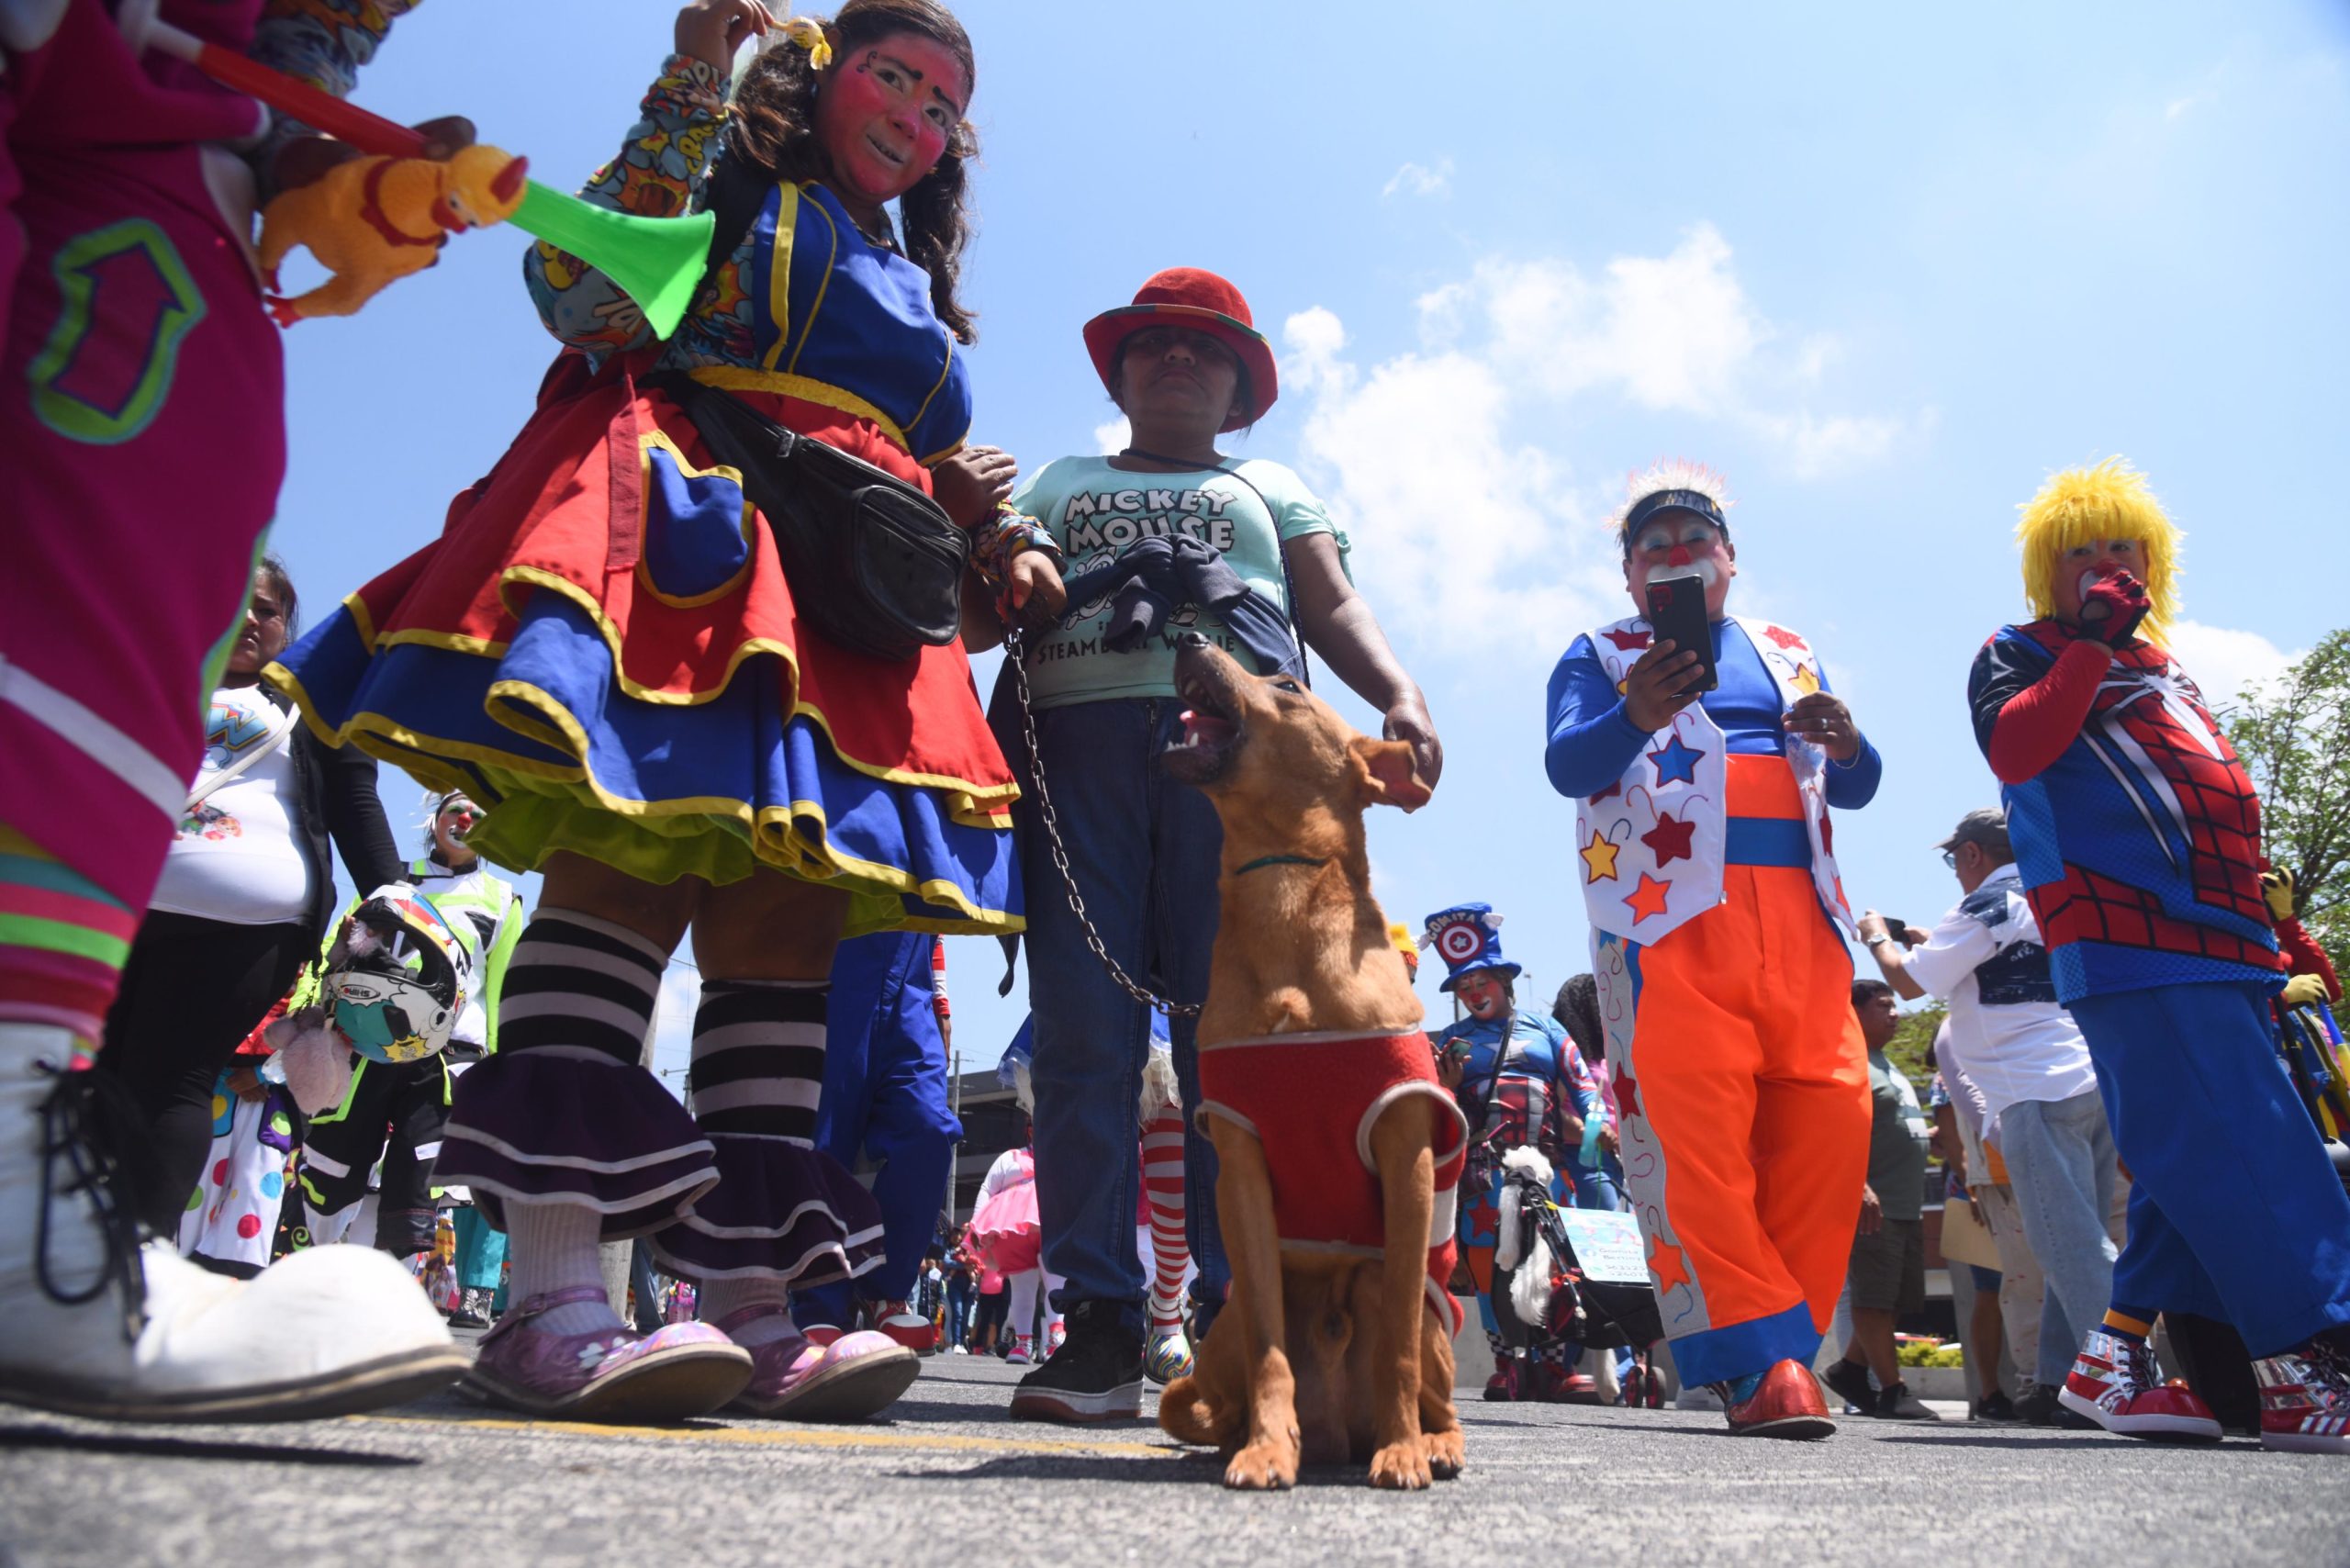 desfile de payasos en Guatemala